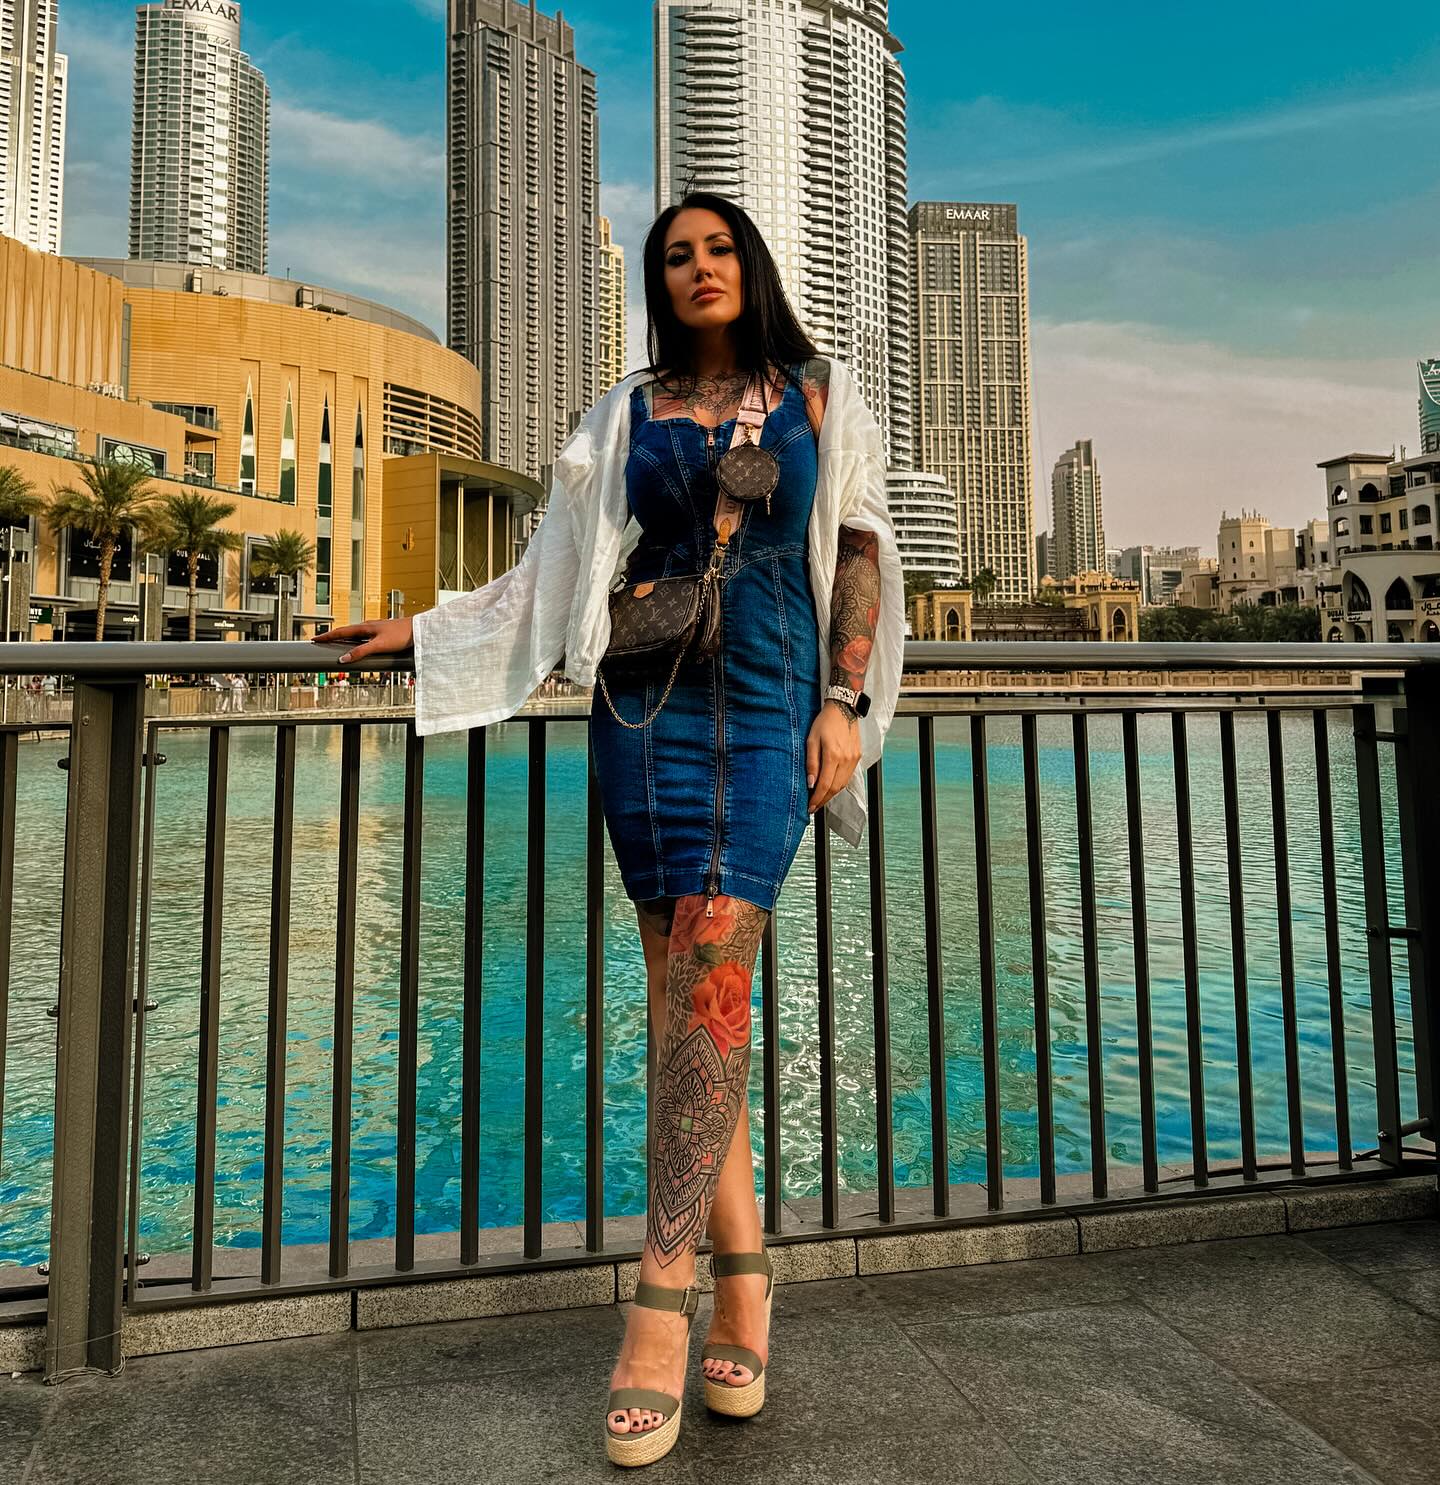 ♥️ Dubai 

What’s your favorite place in Dubai ? 

#dubai #dubaifountain #dubaimall #portz #portrait #port #selfie #jeansdress #inkedgirl #tattooedbabe #inkedup